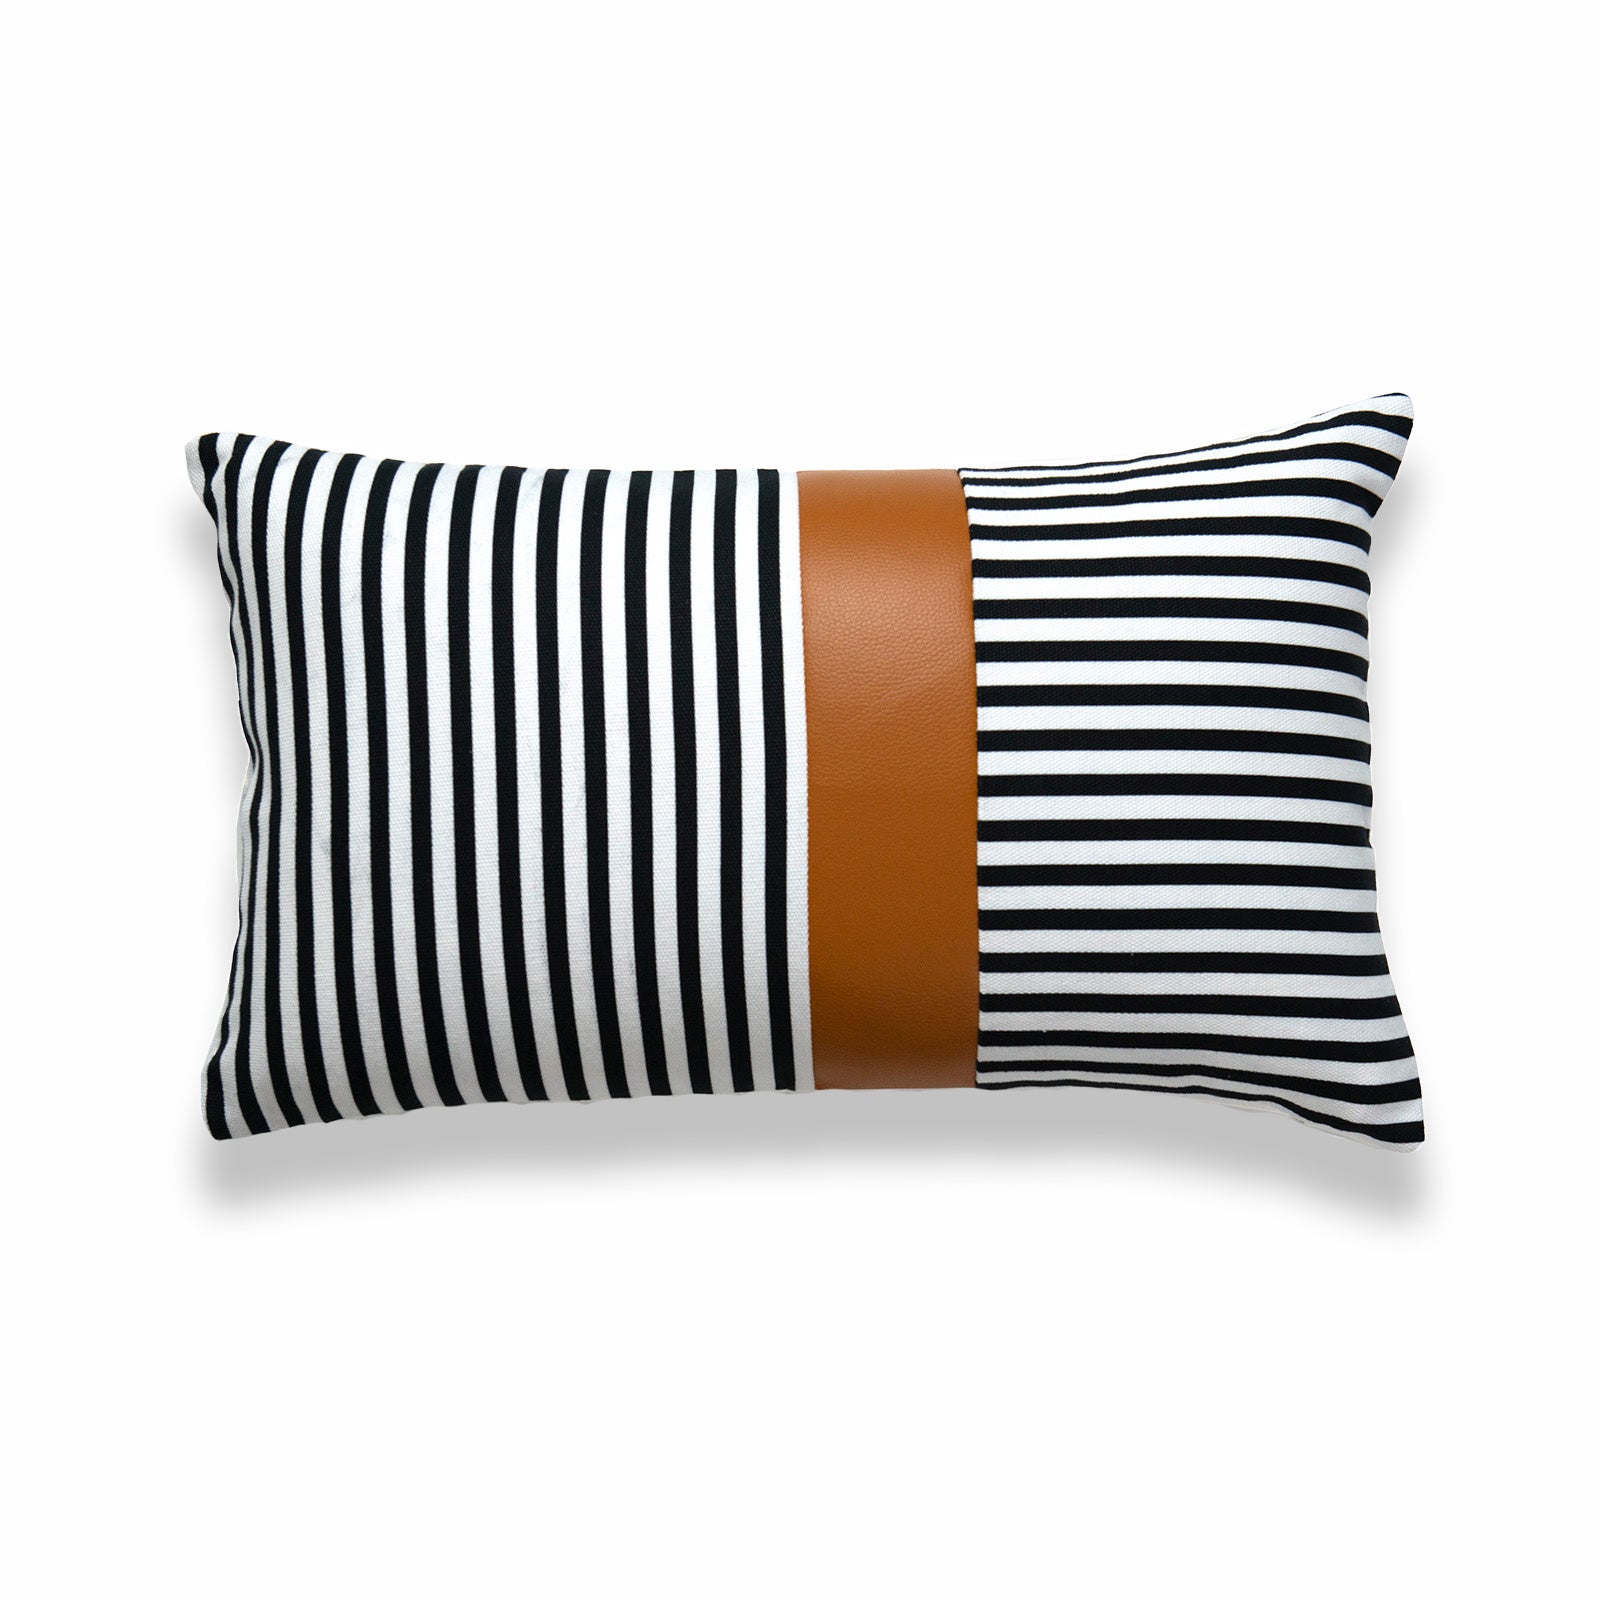 Faux Leather Lumbar Pillow Cover, Modern Design Stripes, Camel Black, 12"x20"